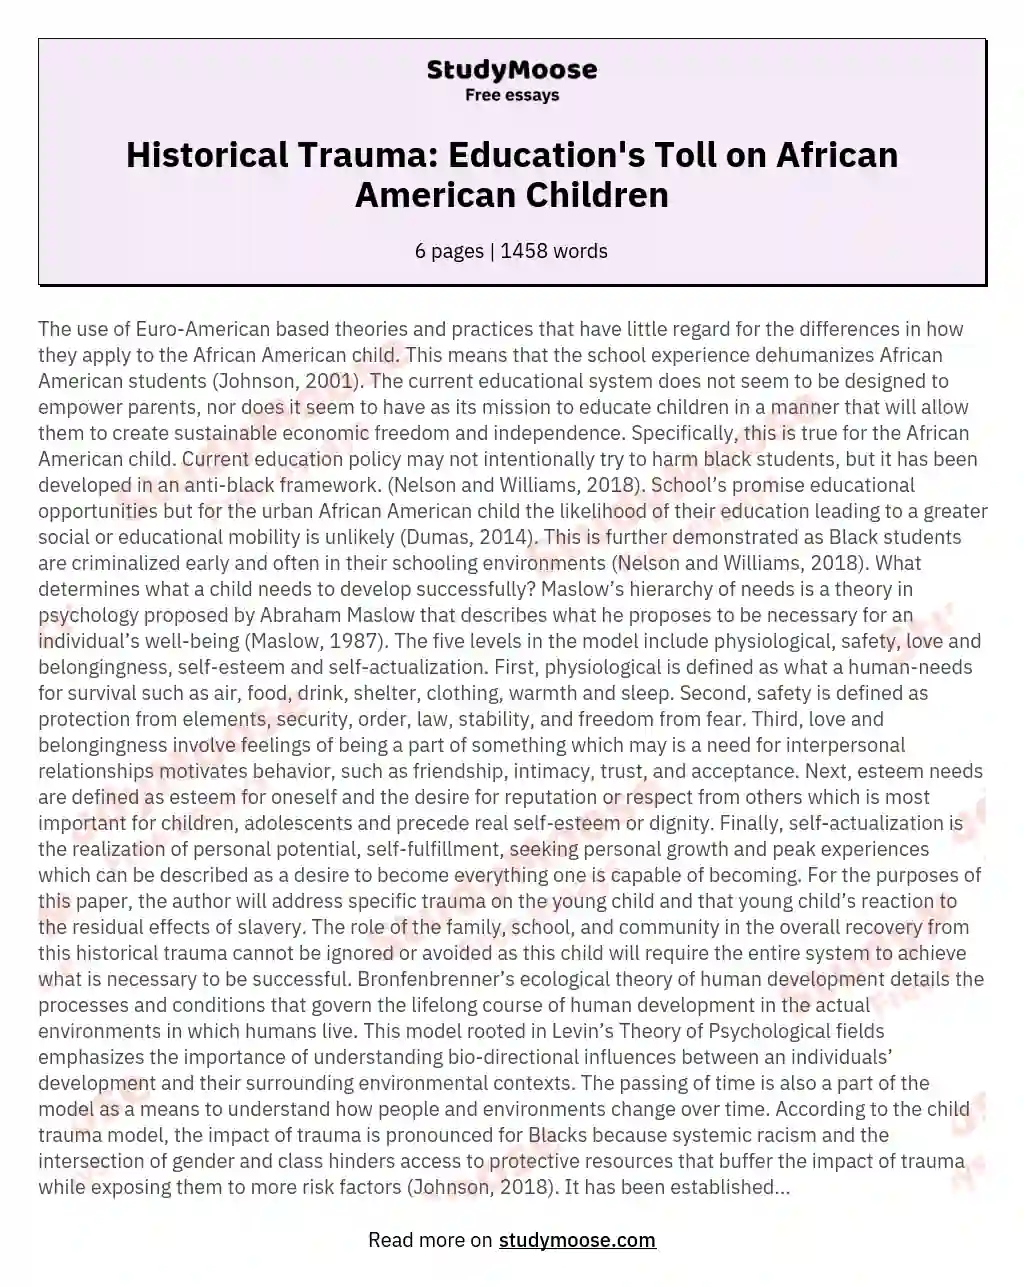 Historical Trauma: Education's Toll on African American Children essay